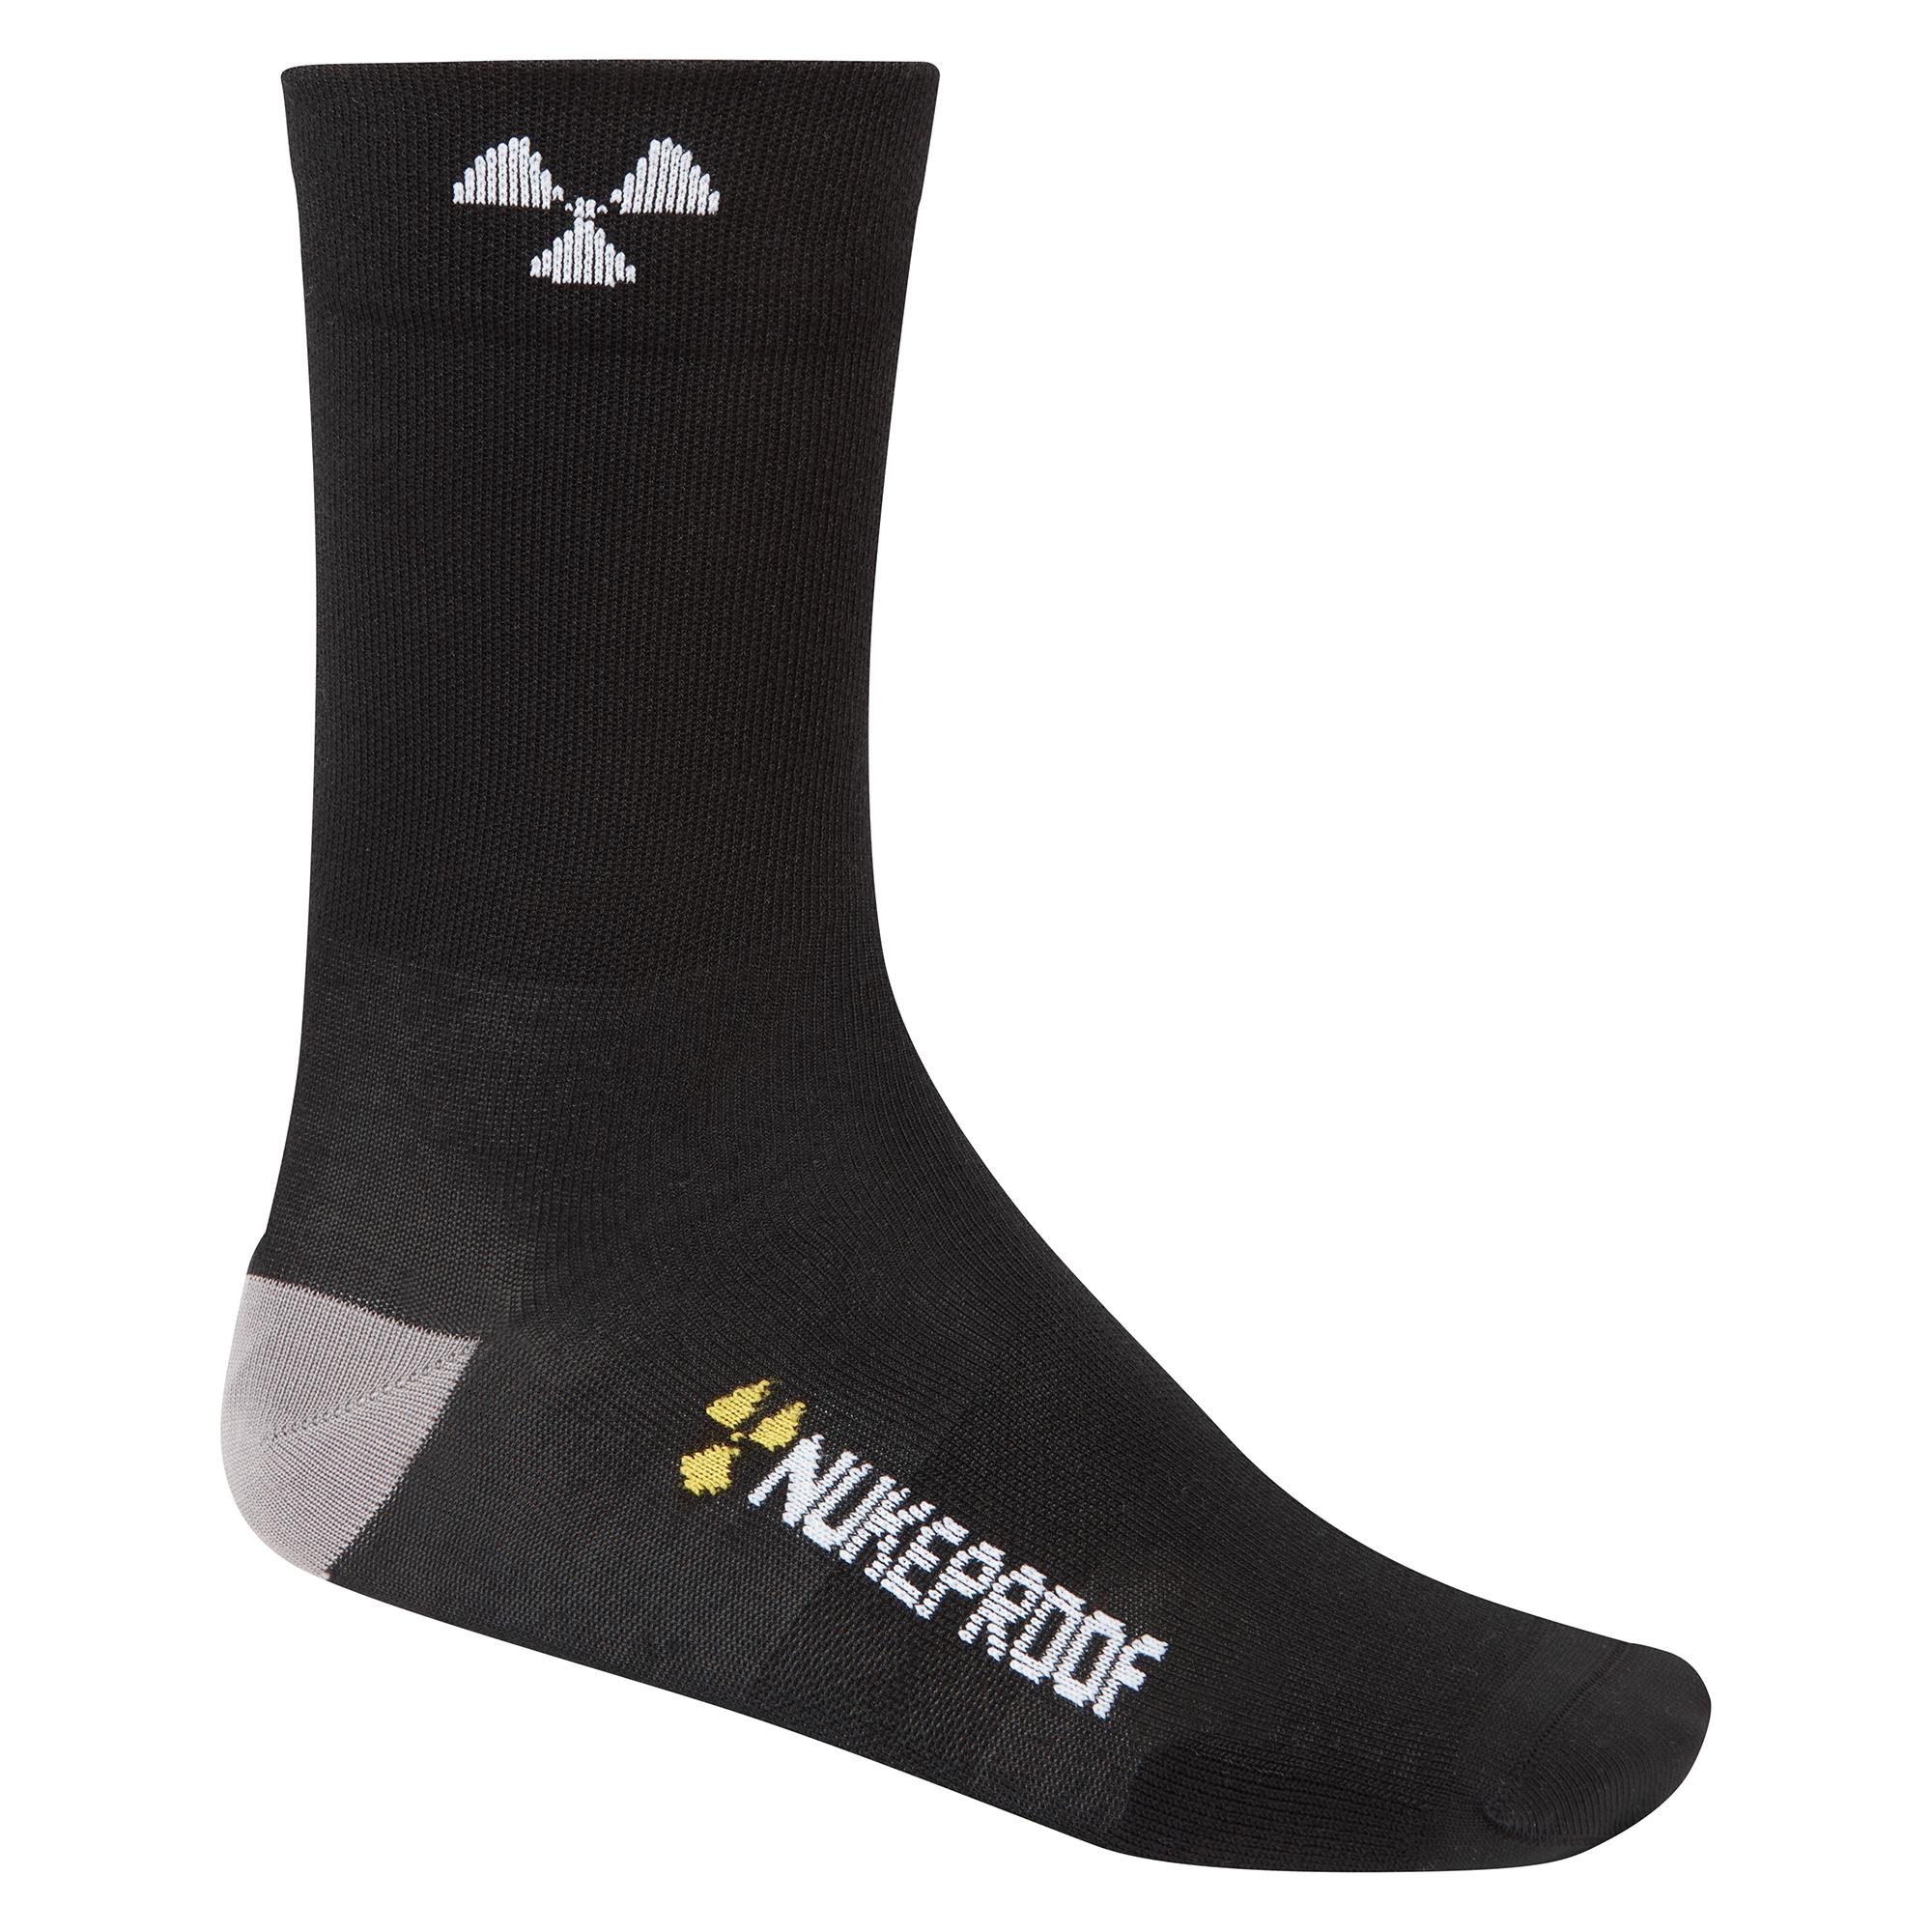 Nukeproof Blackline Sock 2.0 - Black/grey